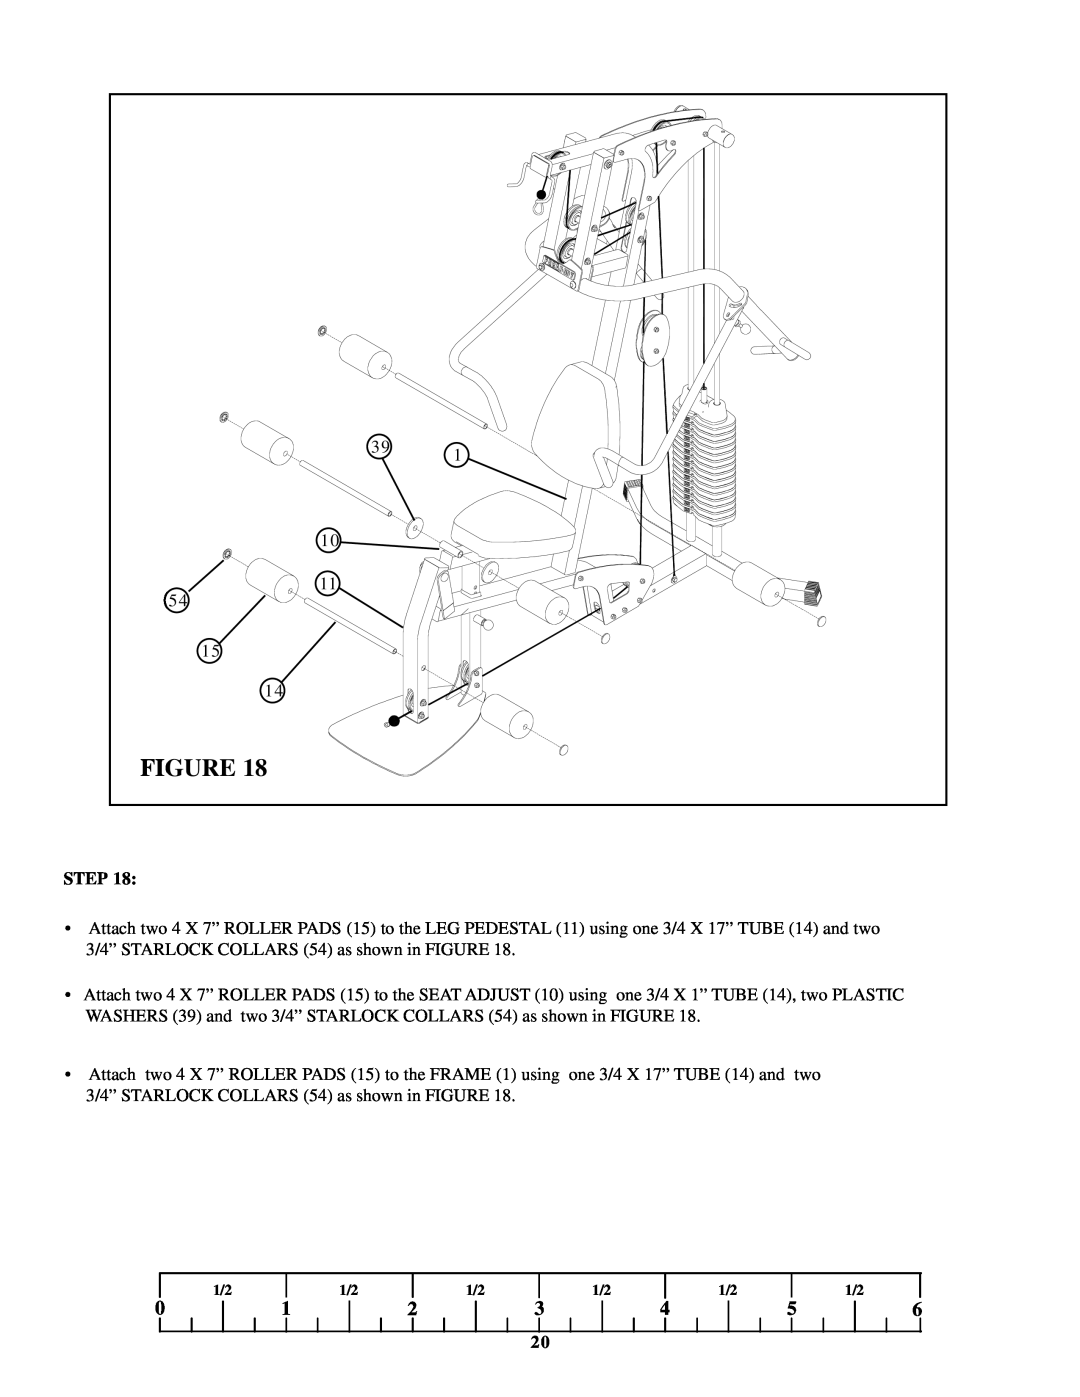 ParaBody 220 manual Step, 3/4” STARLOCK COLLARS 54 as shown in FIGURE 